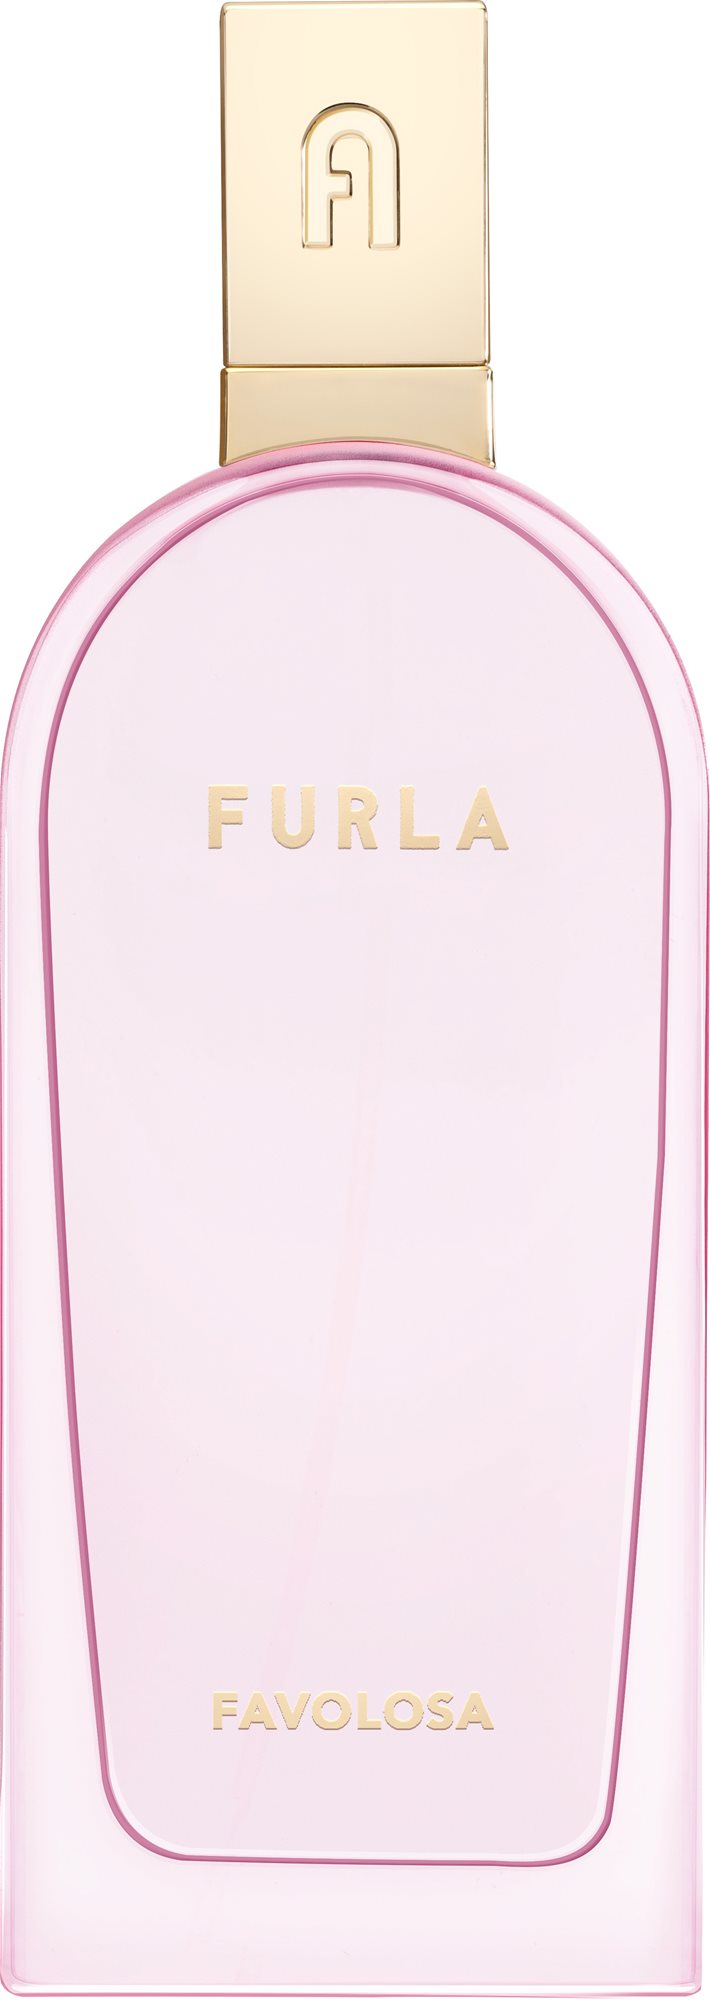 Parfüm FURLA Favolosa EdP 100 ml